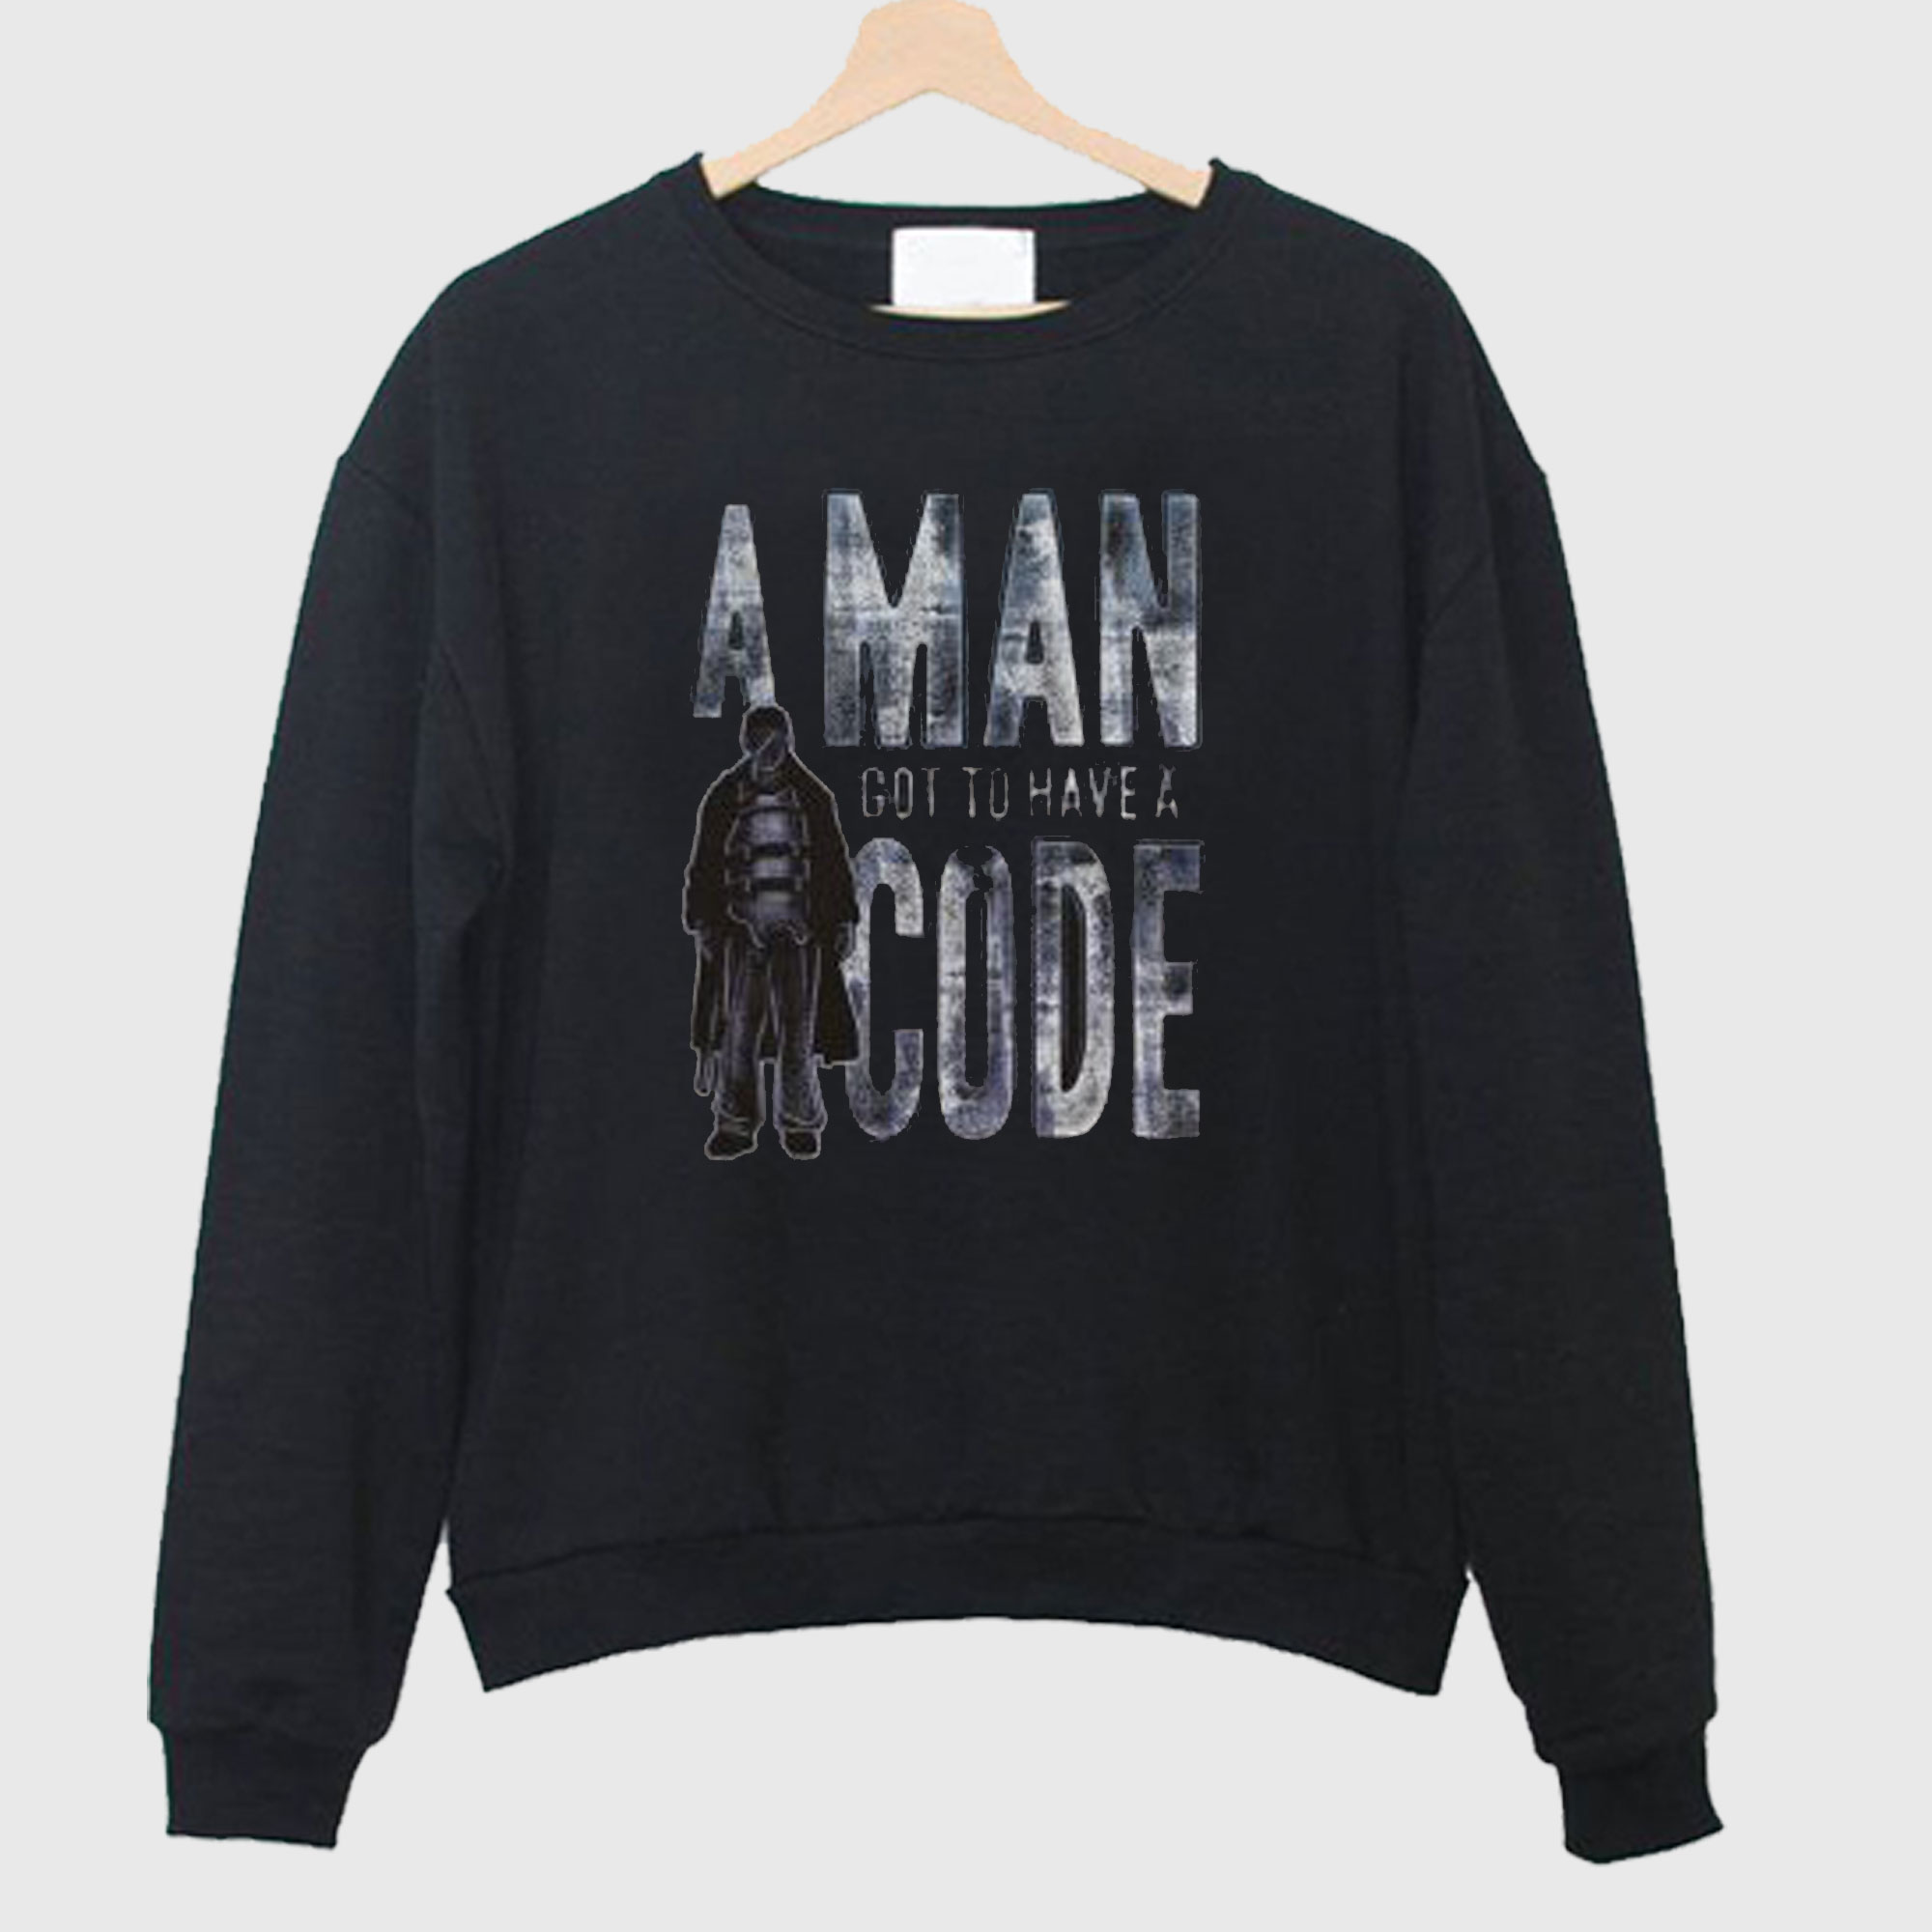 A Man Got To Have A Code Sweatshirt